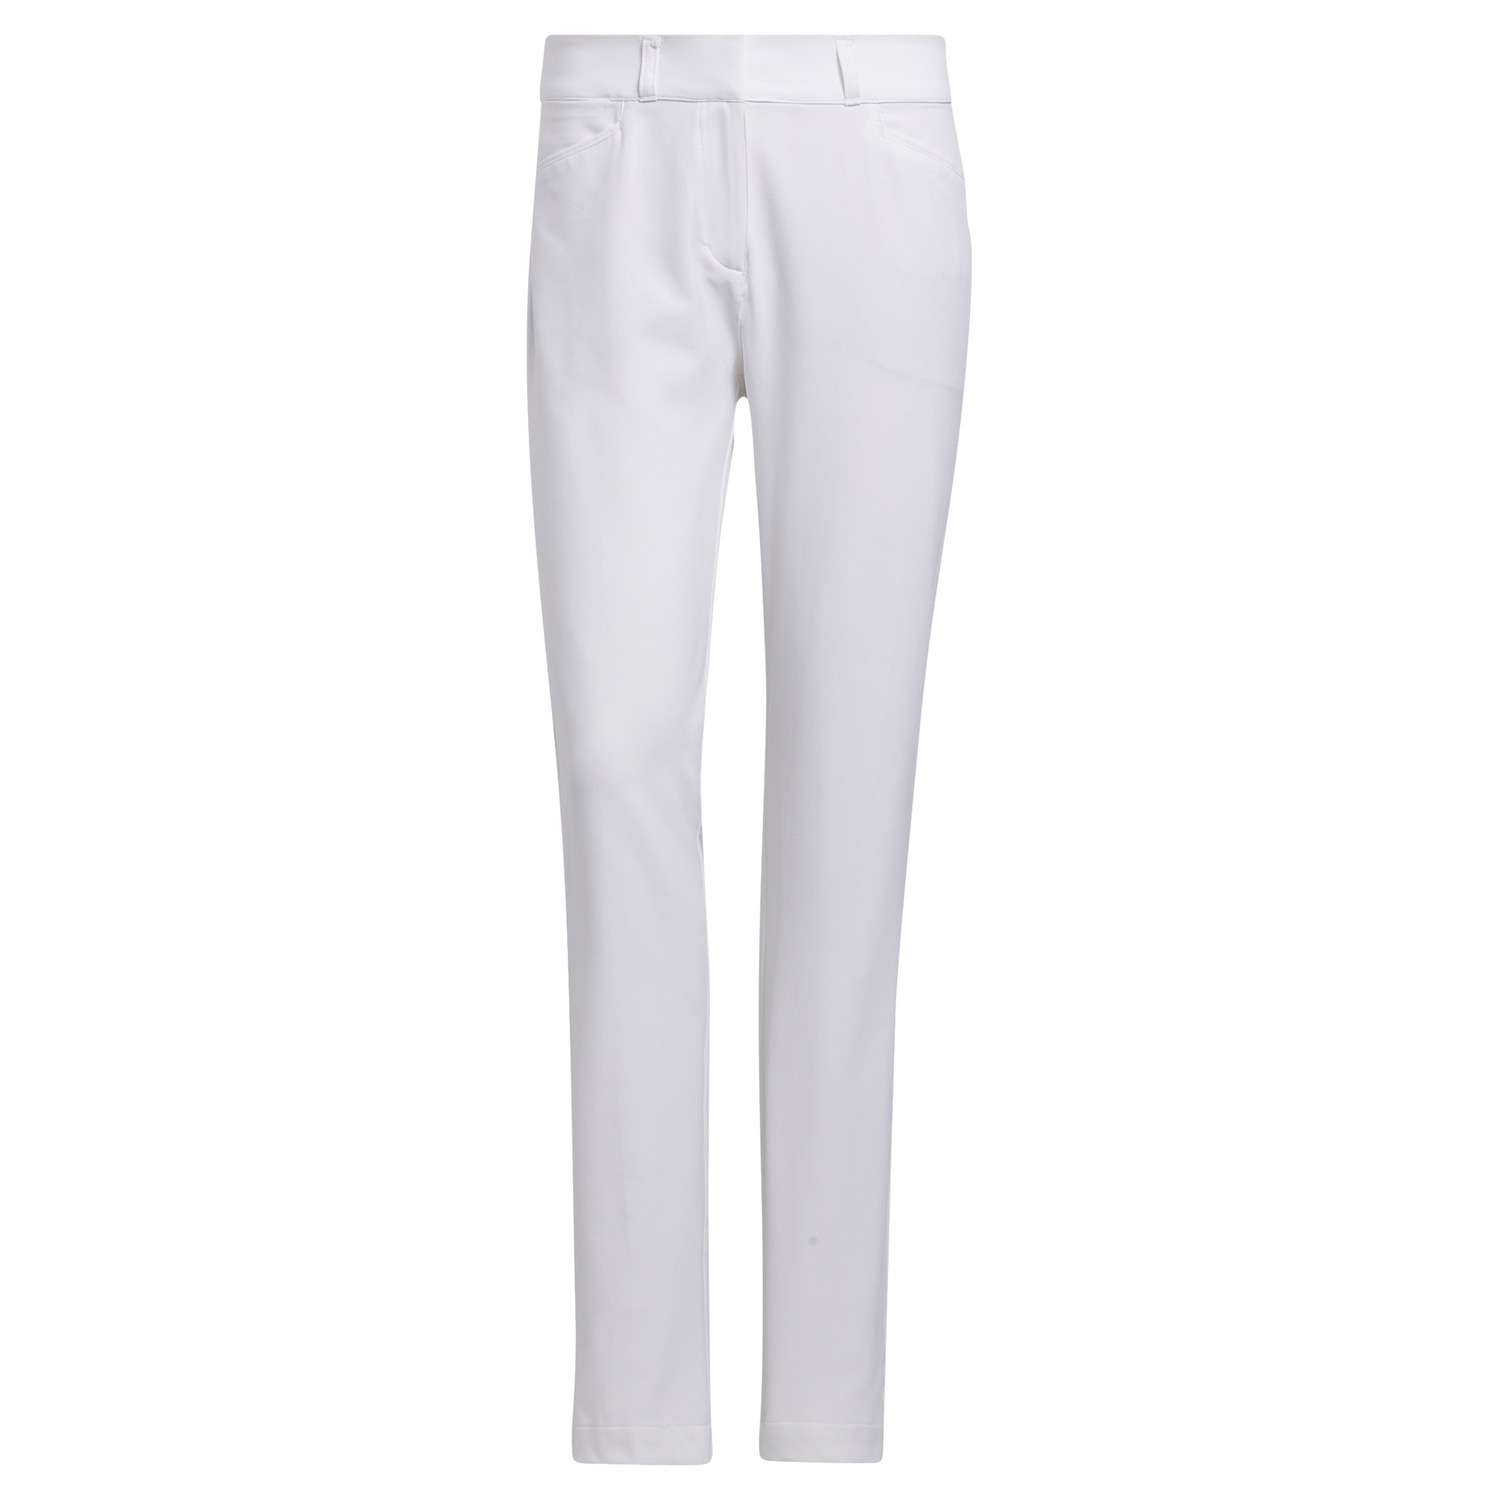 Adidas Full Length Pant White